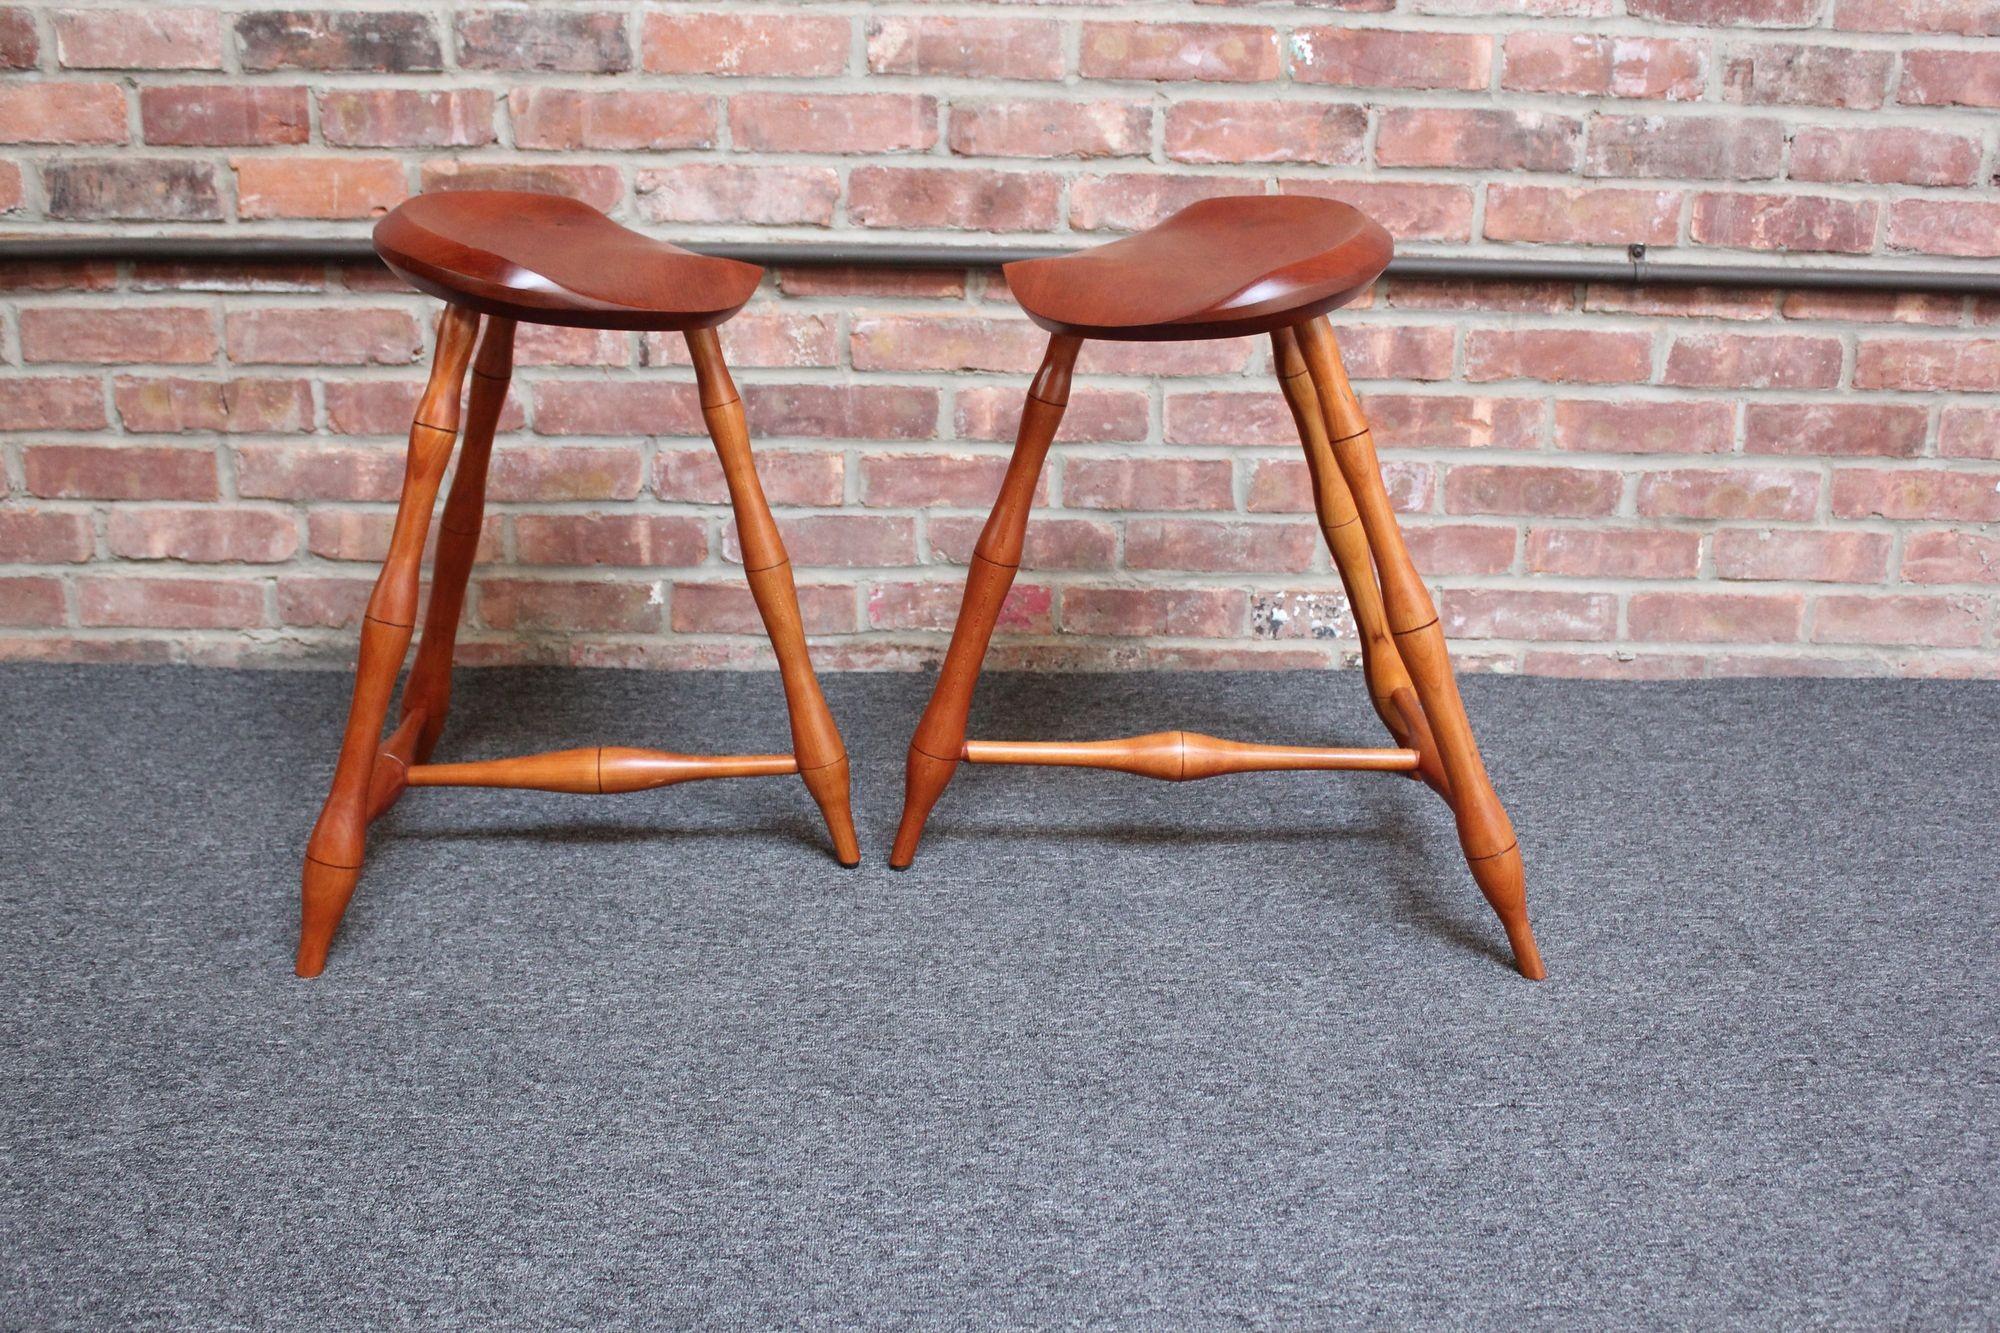 American Craftsman Pair of Vintage Studio Craft Windsor-Style Three Legged Low Stools in Cherrywood For Sale